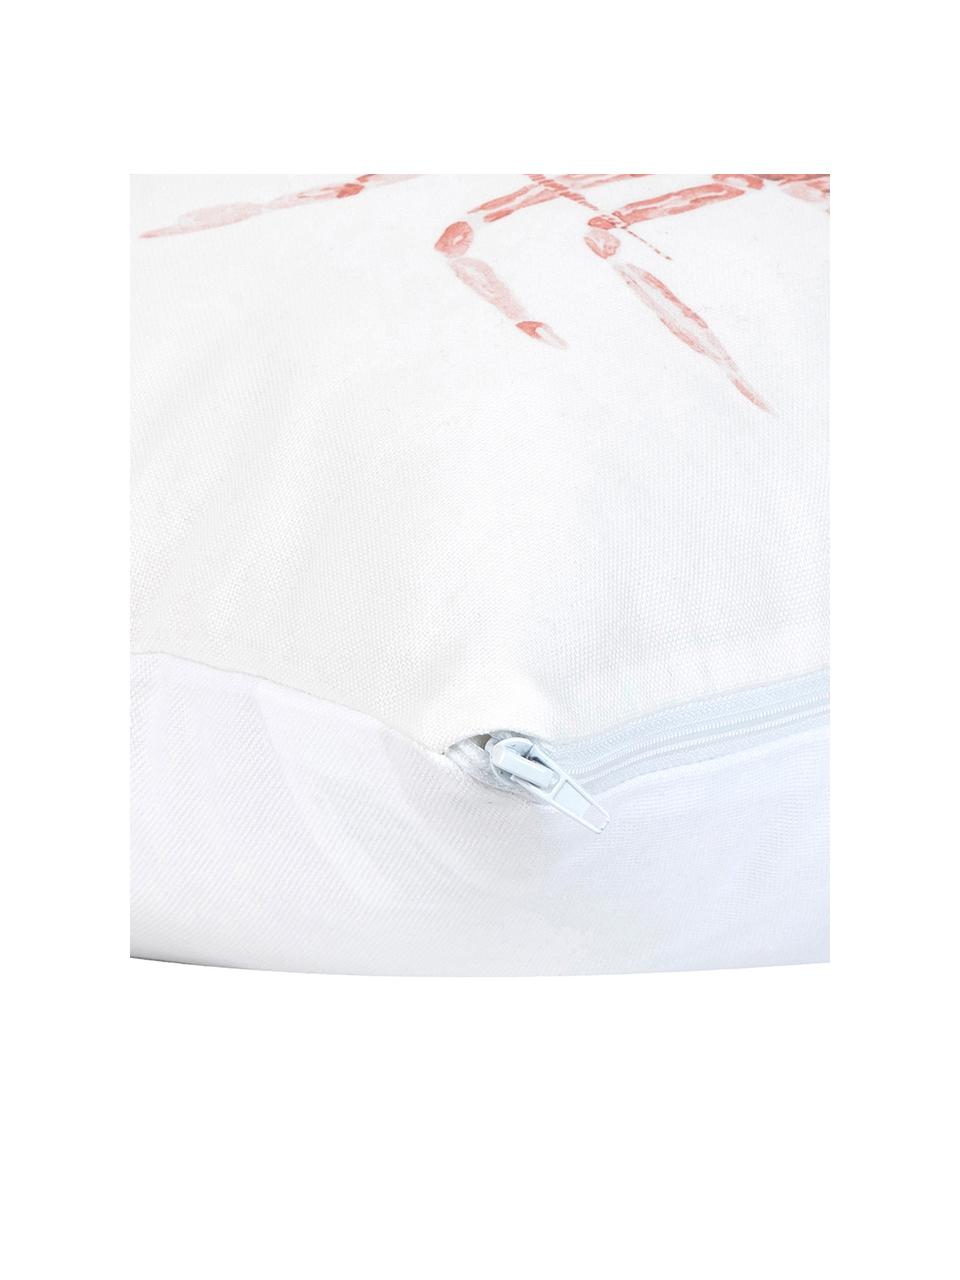 Kissenhülle Homard mit Print in Aquarelloptik, 100% Baumwolle, Rot, Weiss, 40 x 40 cm